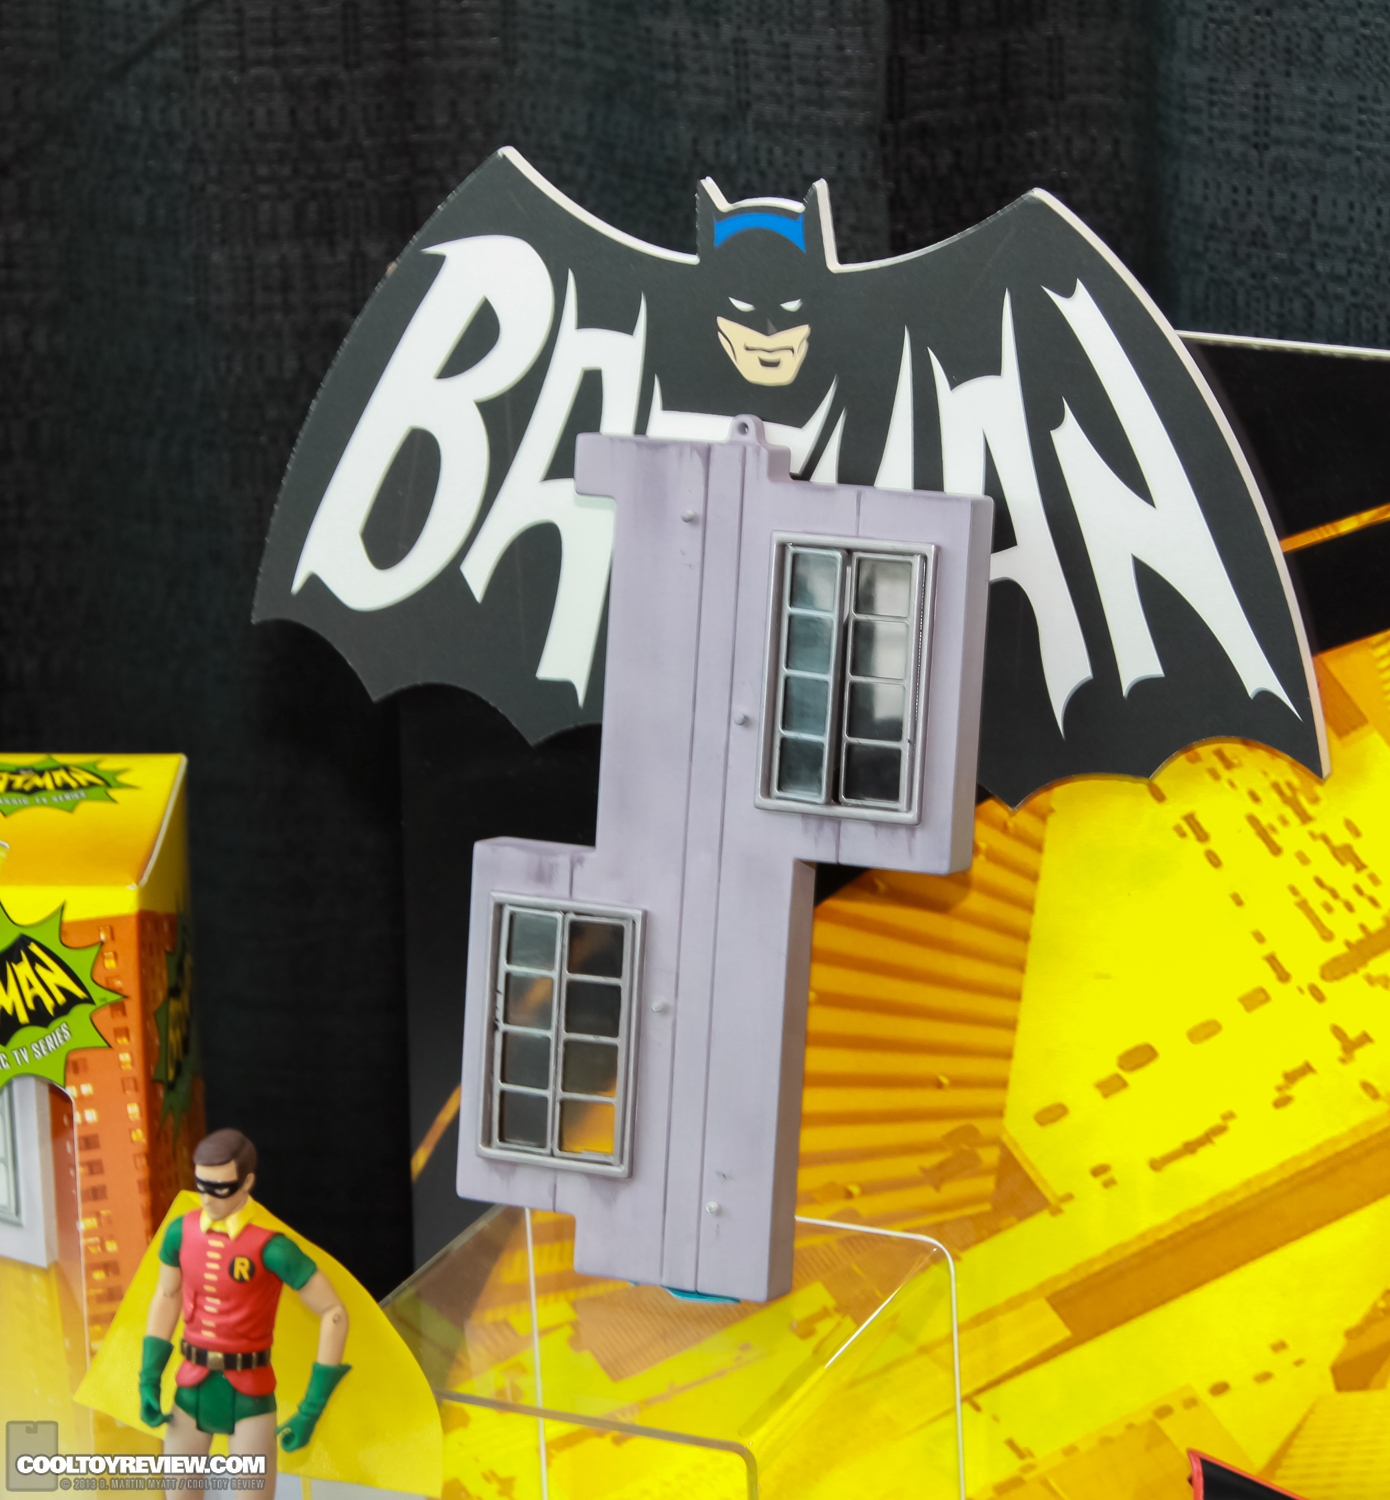 2013_International_Toy_Fair_Mattel_Batman_Classic_TV_Series-17.jpg